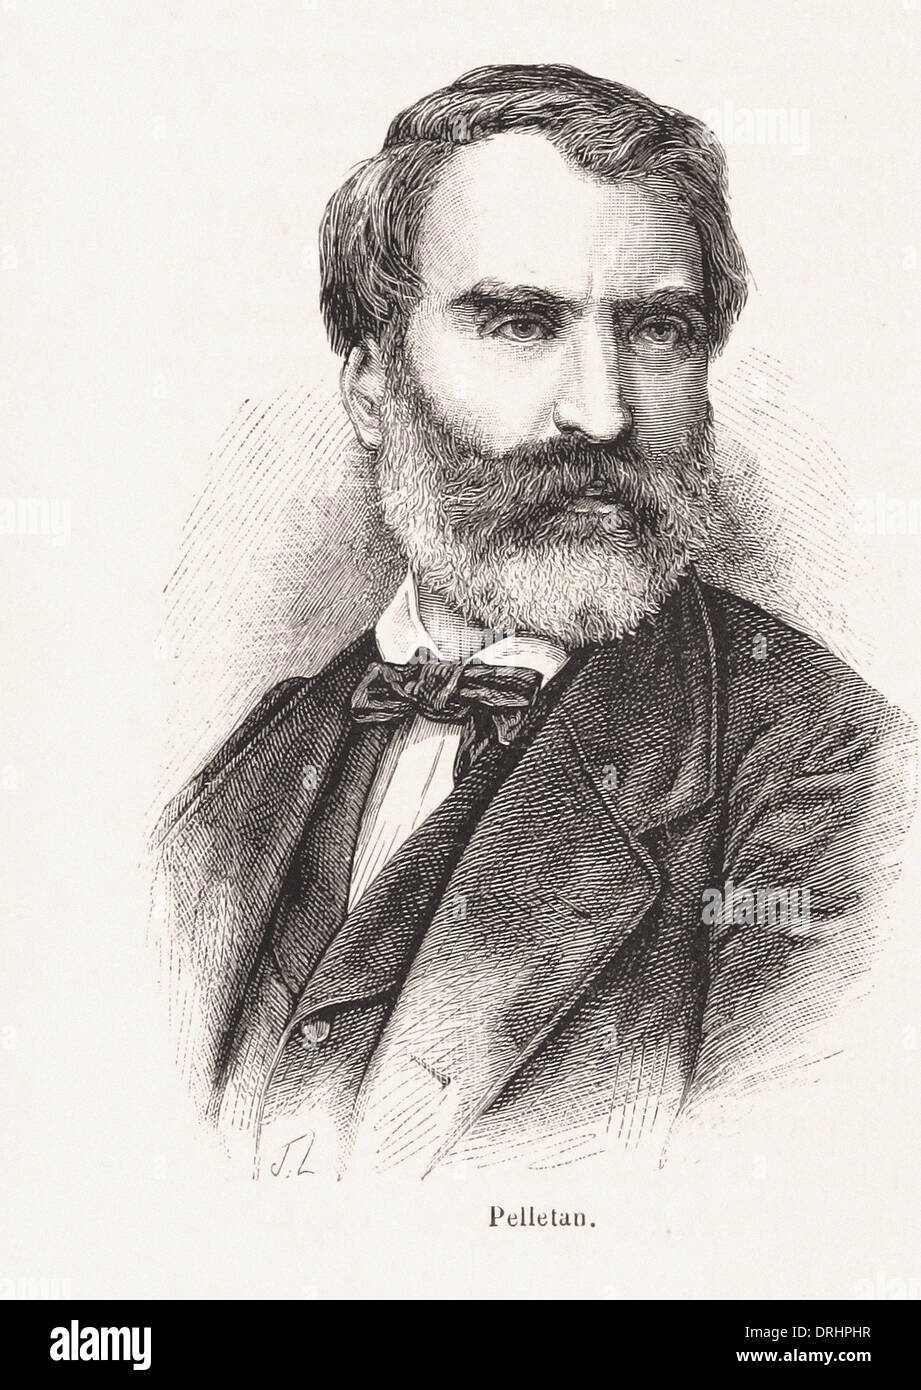 Portrait of Pelletan - French engraving XIX th century Stock Photo